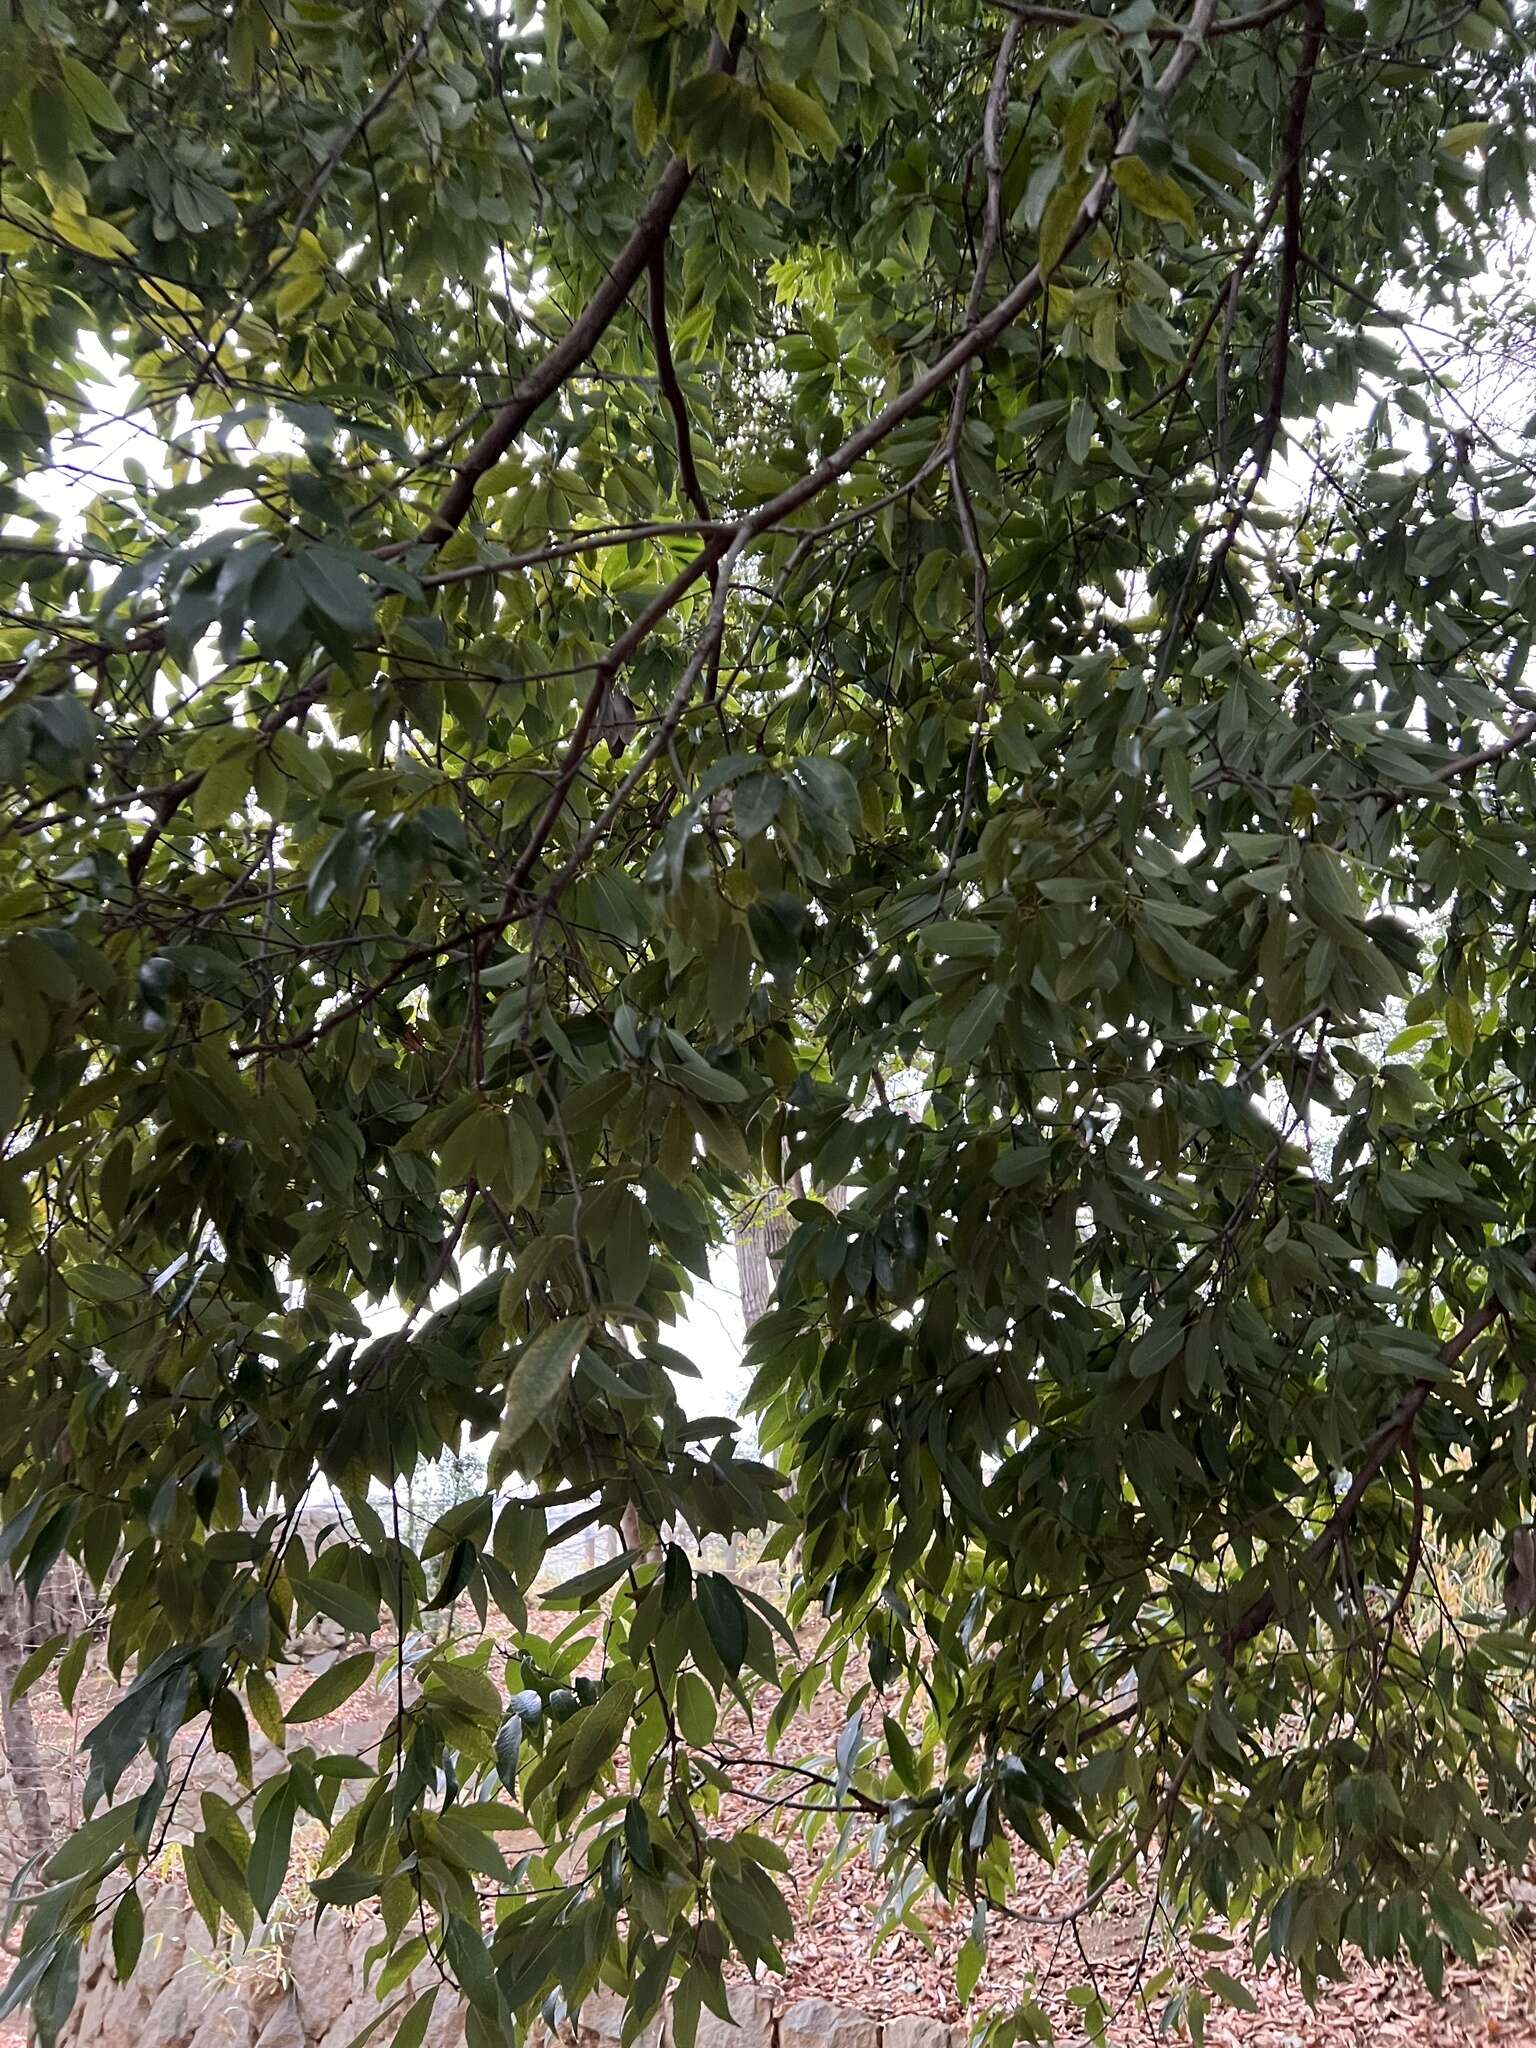 Image of bamboo-leaf oak